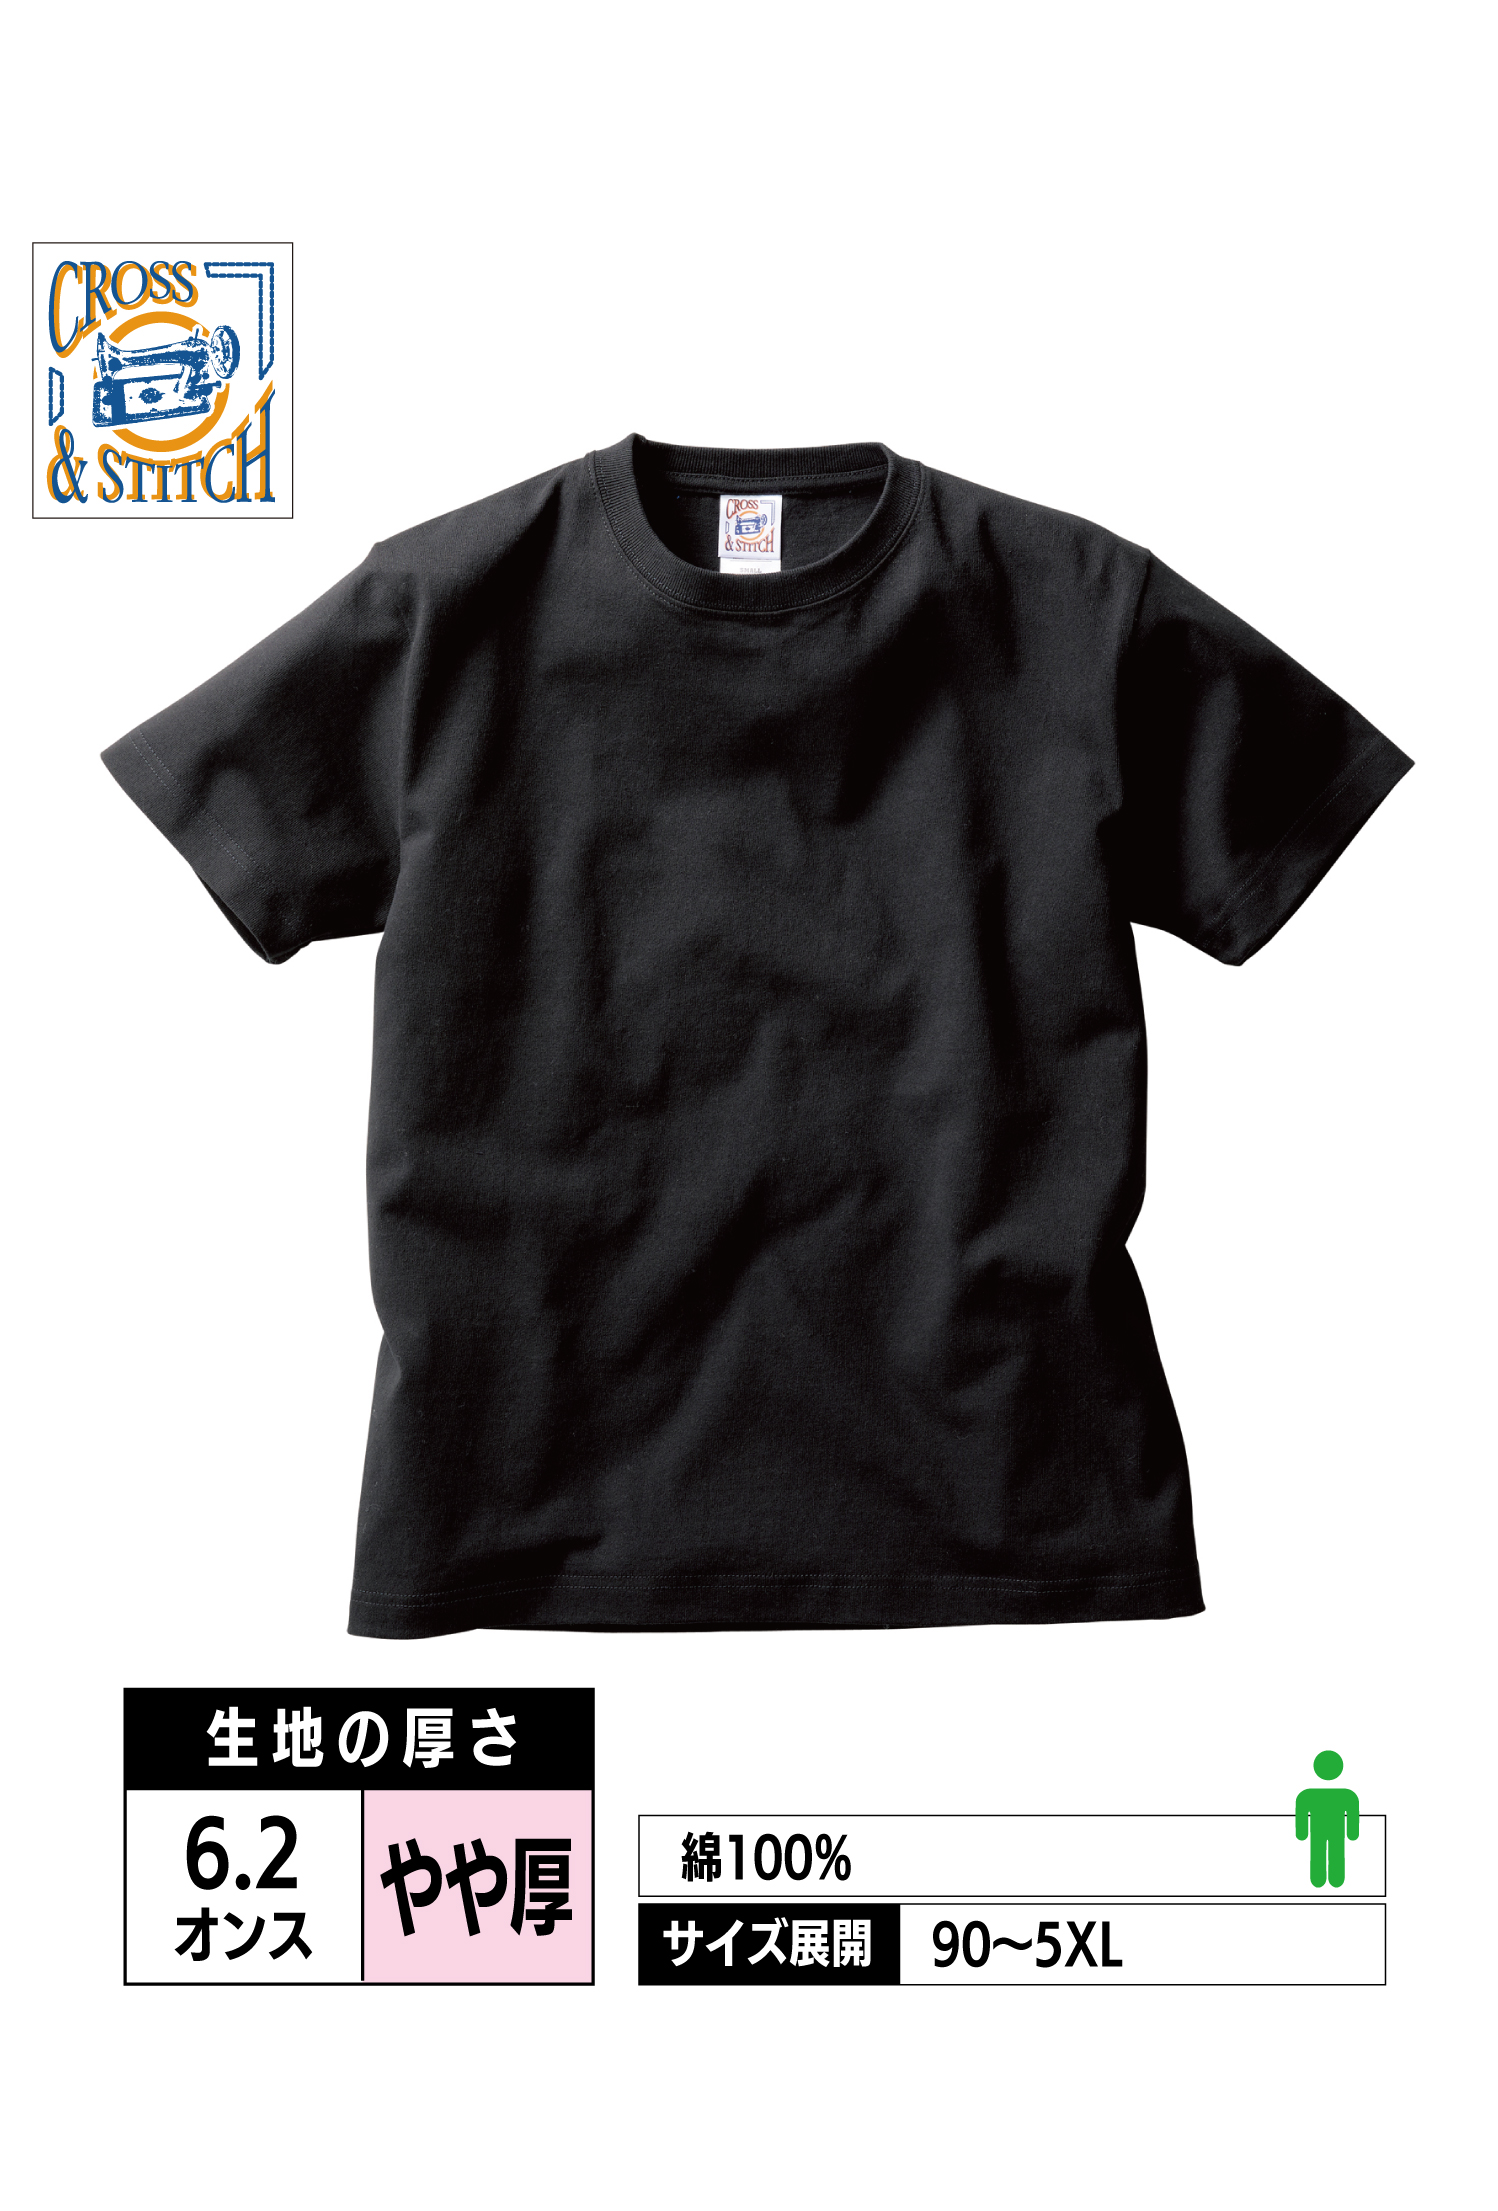 OE1116｜オープンエンド マックスウェイトTシャツ【全41色】CROSS&STITCH